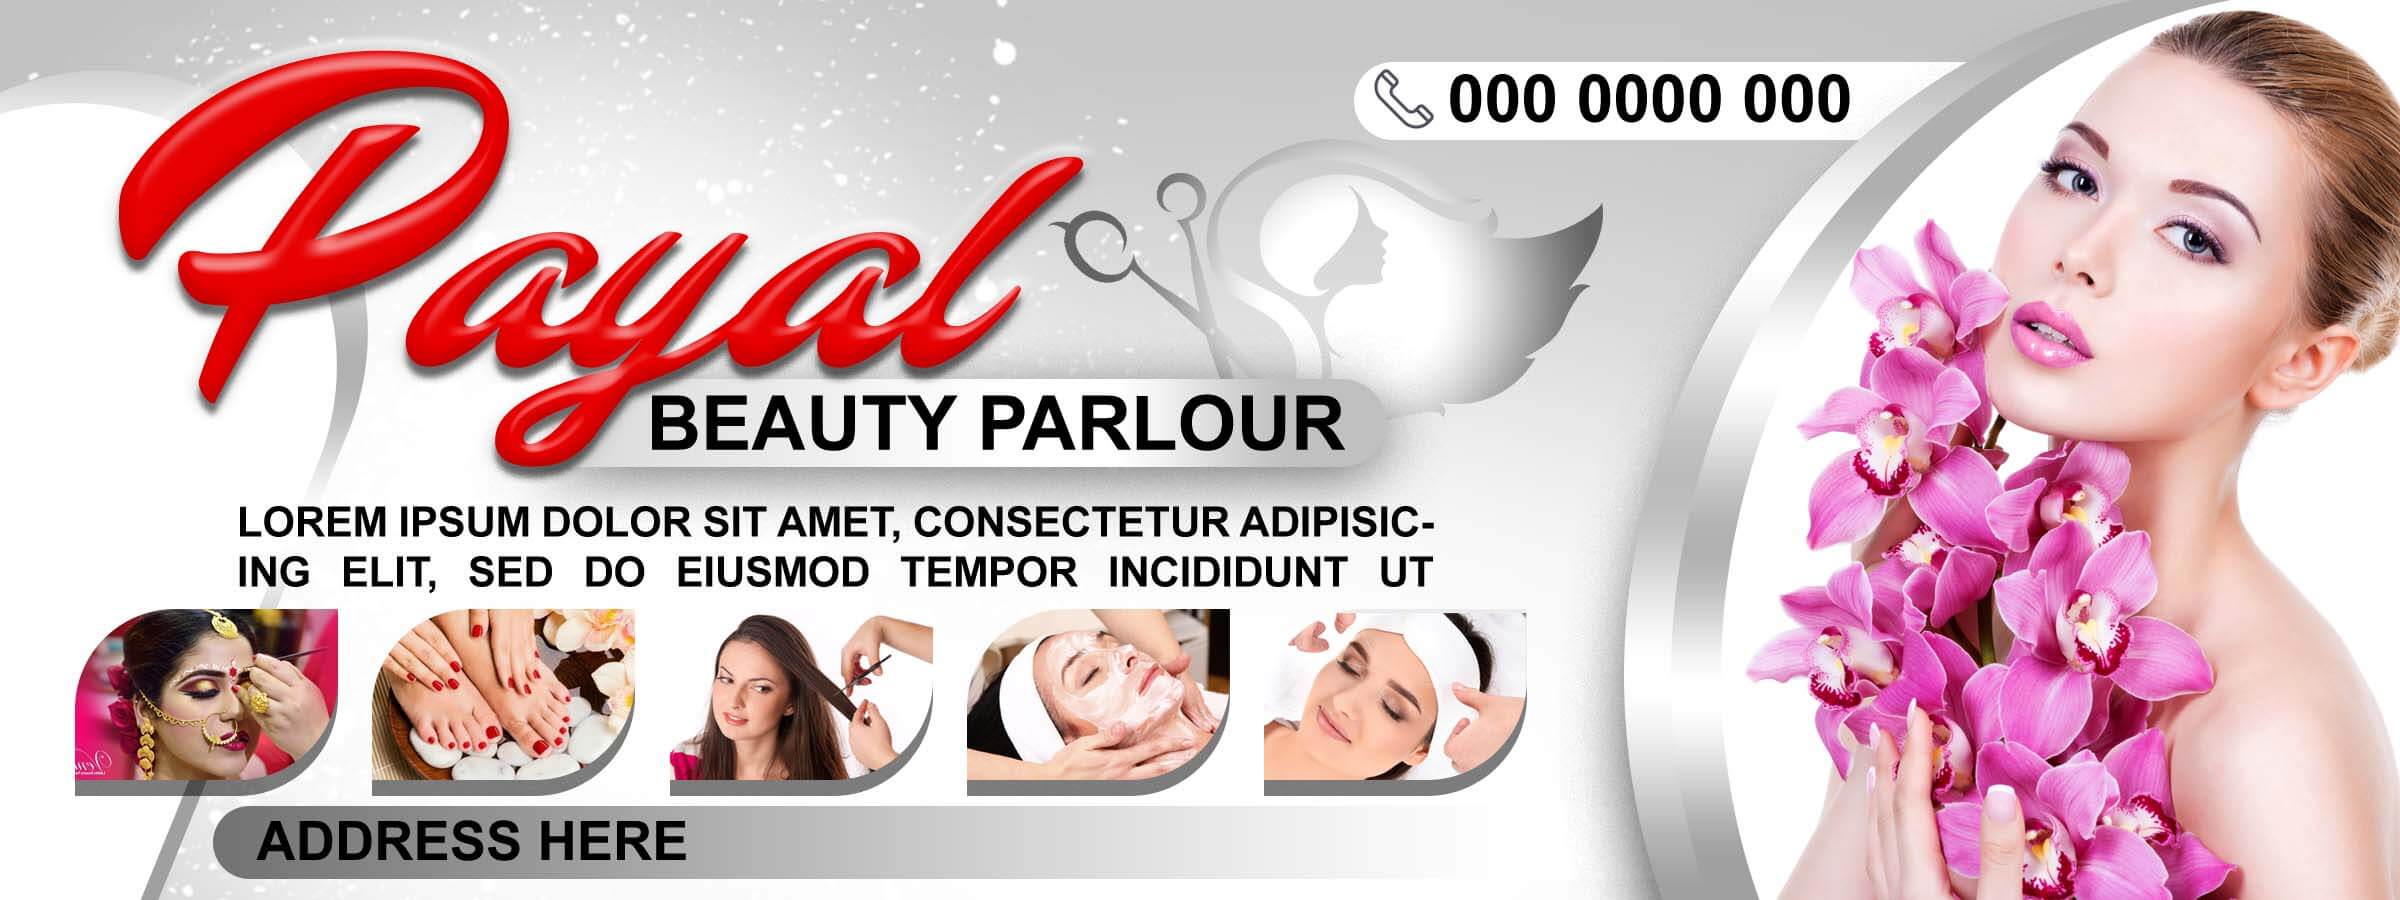 Beauty Parlour Banner